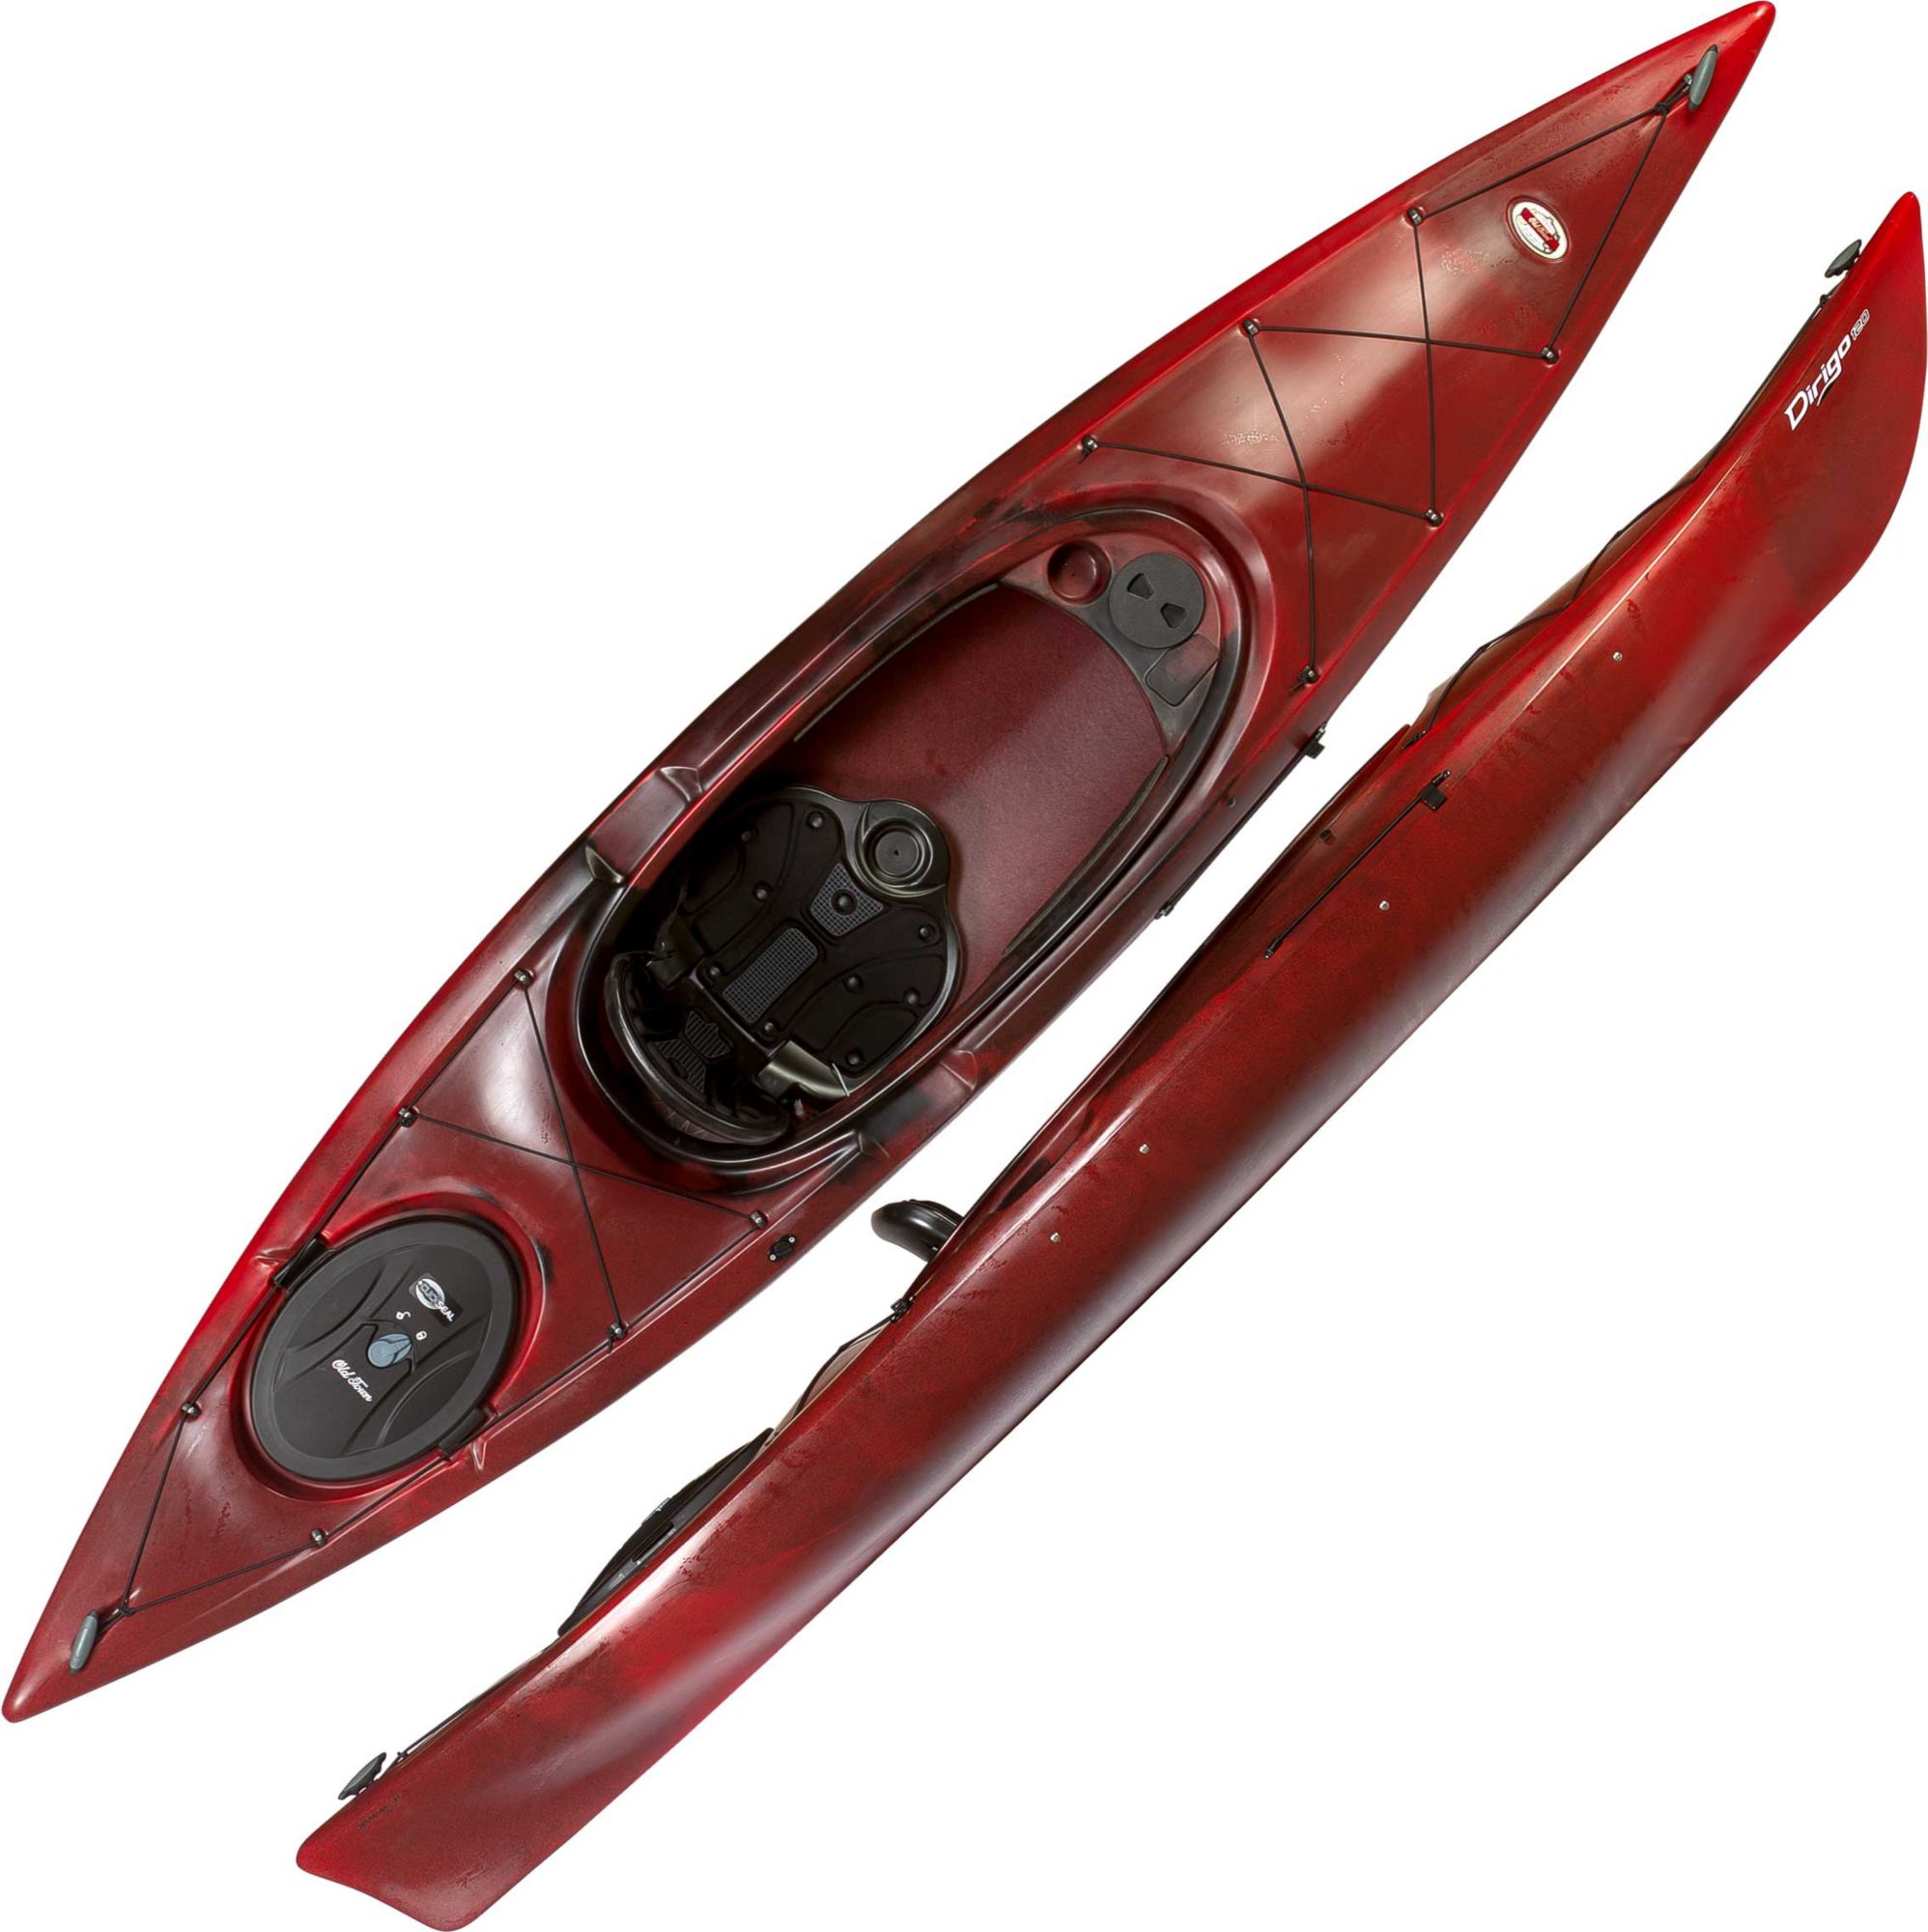 kayaks best price guarantee at dick's